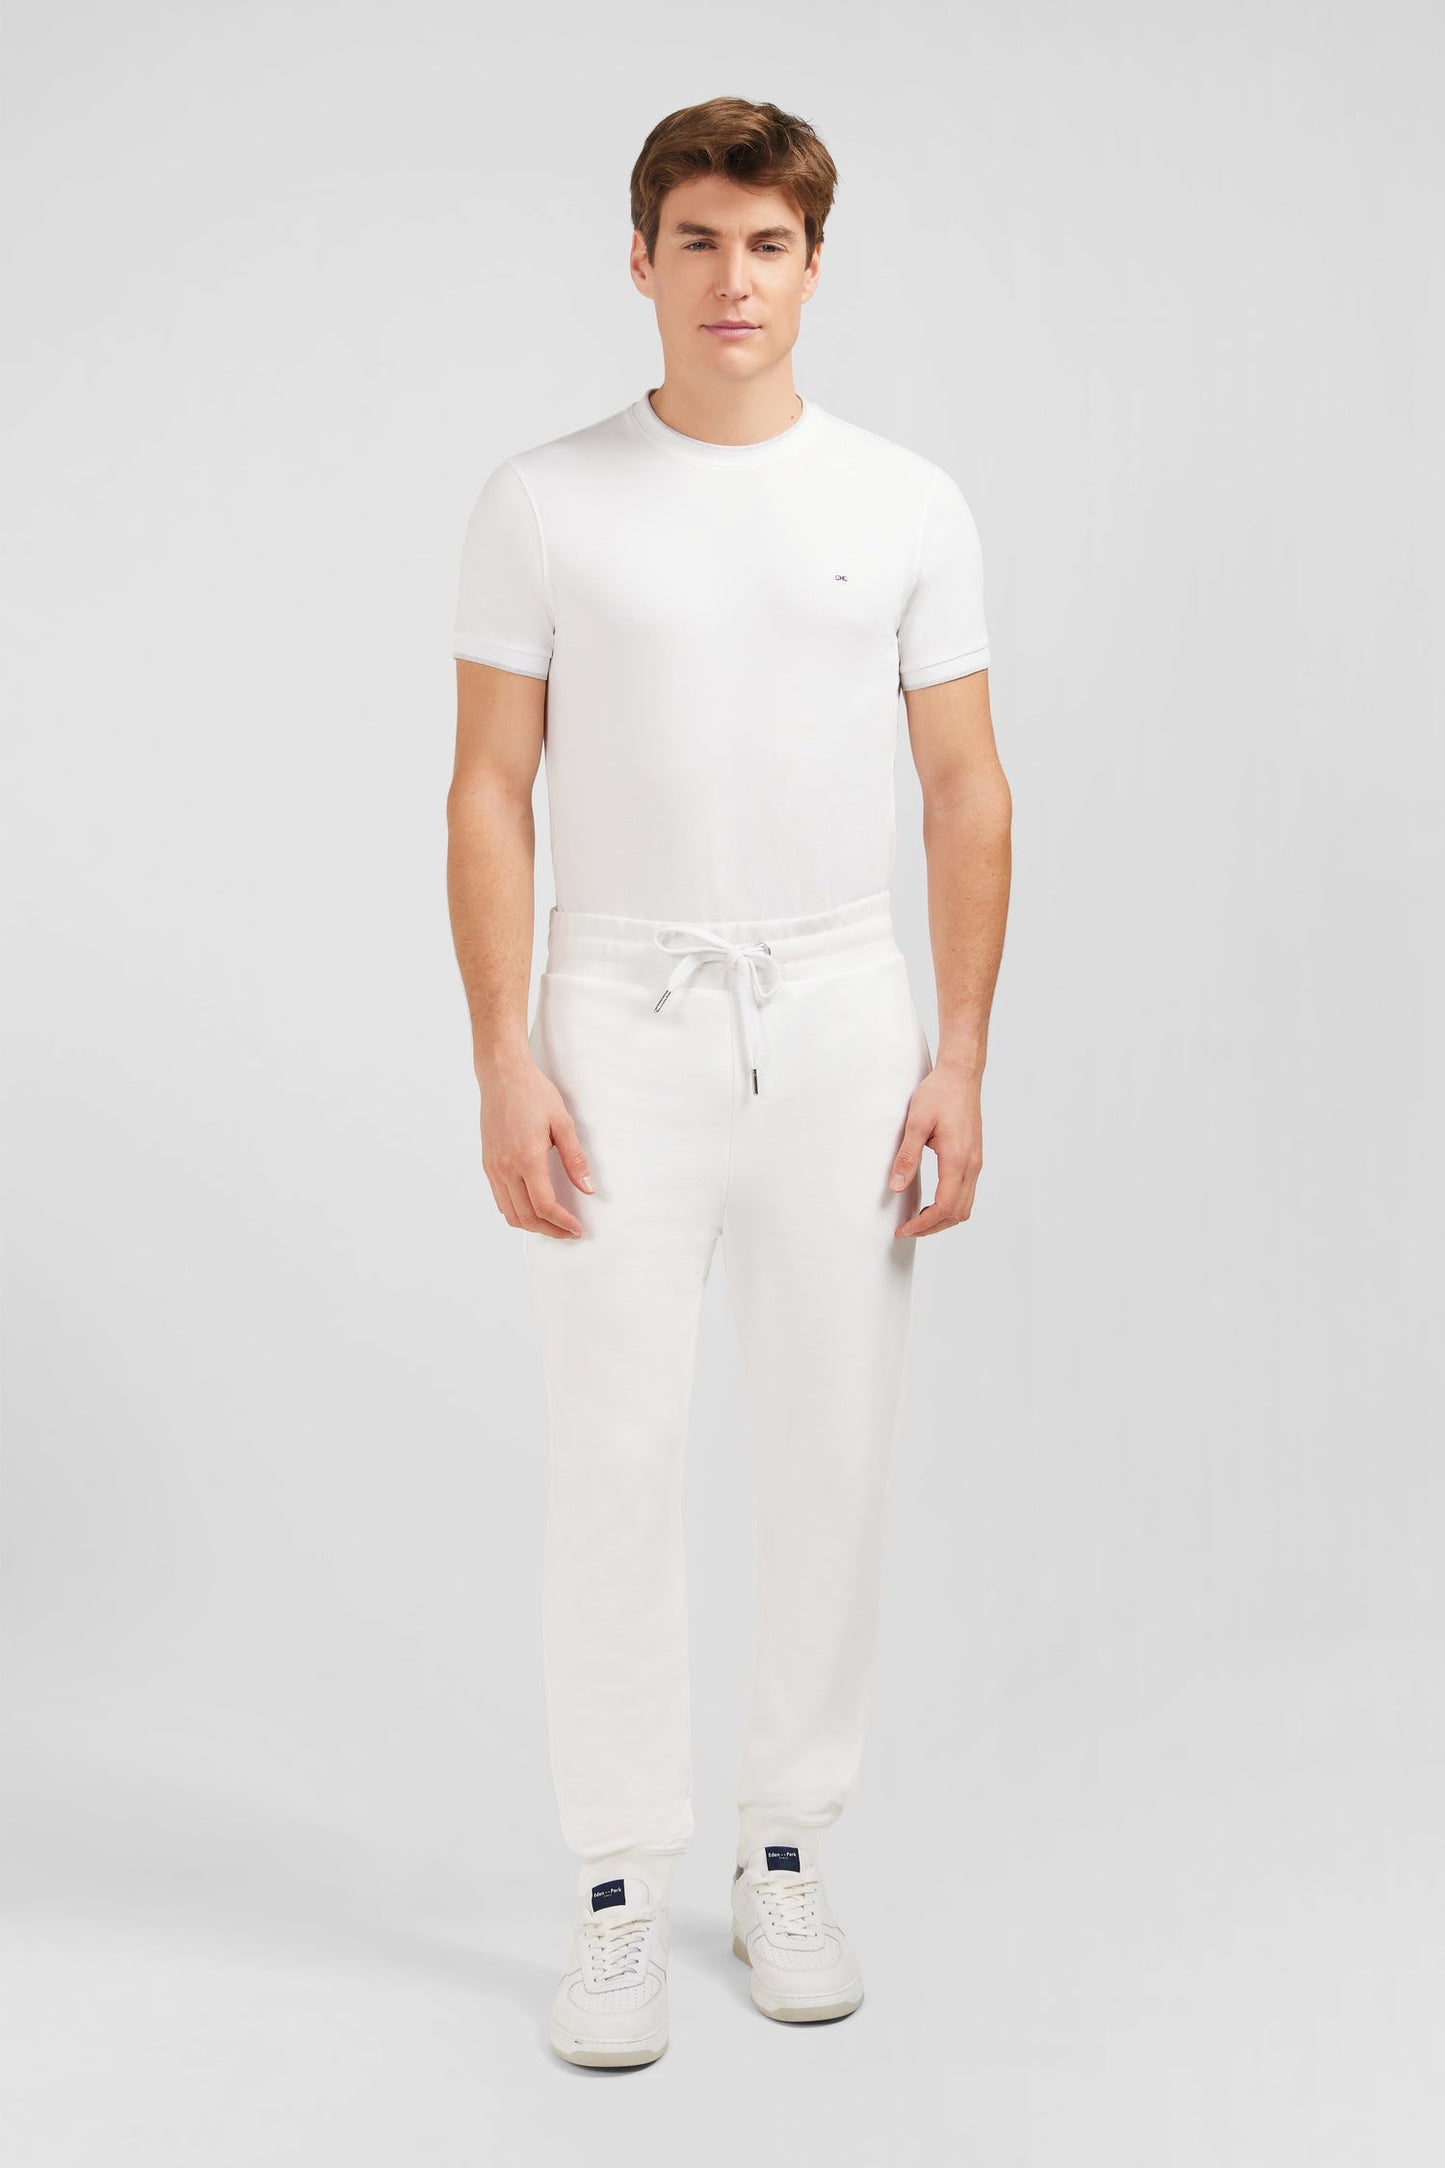 Pantalon de jogging blanc - Image 1